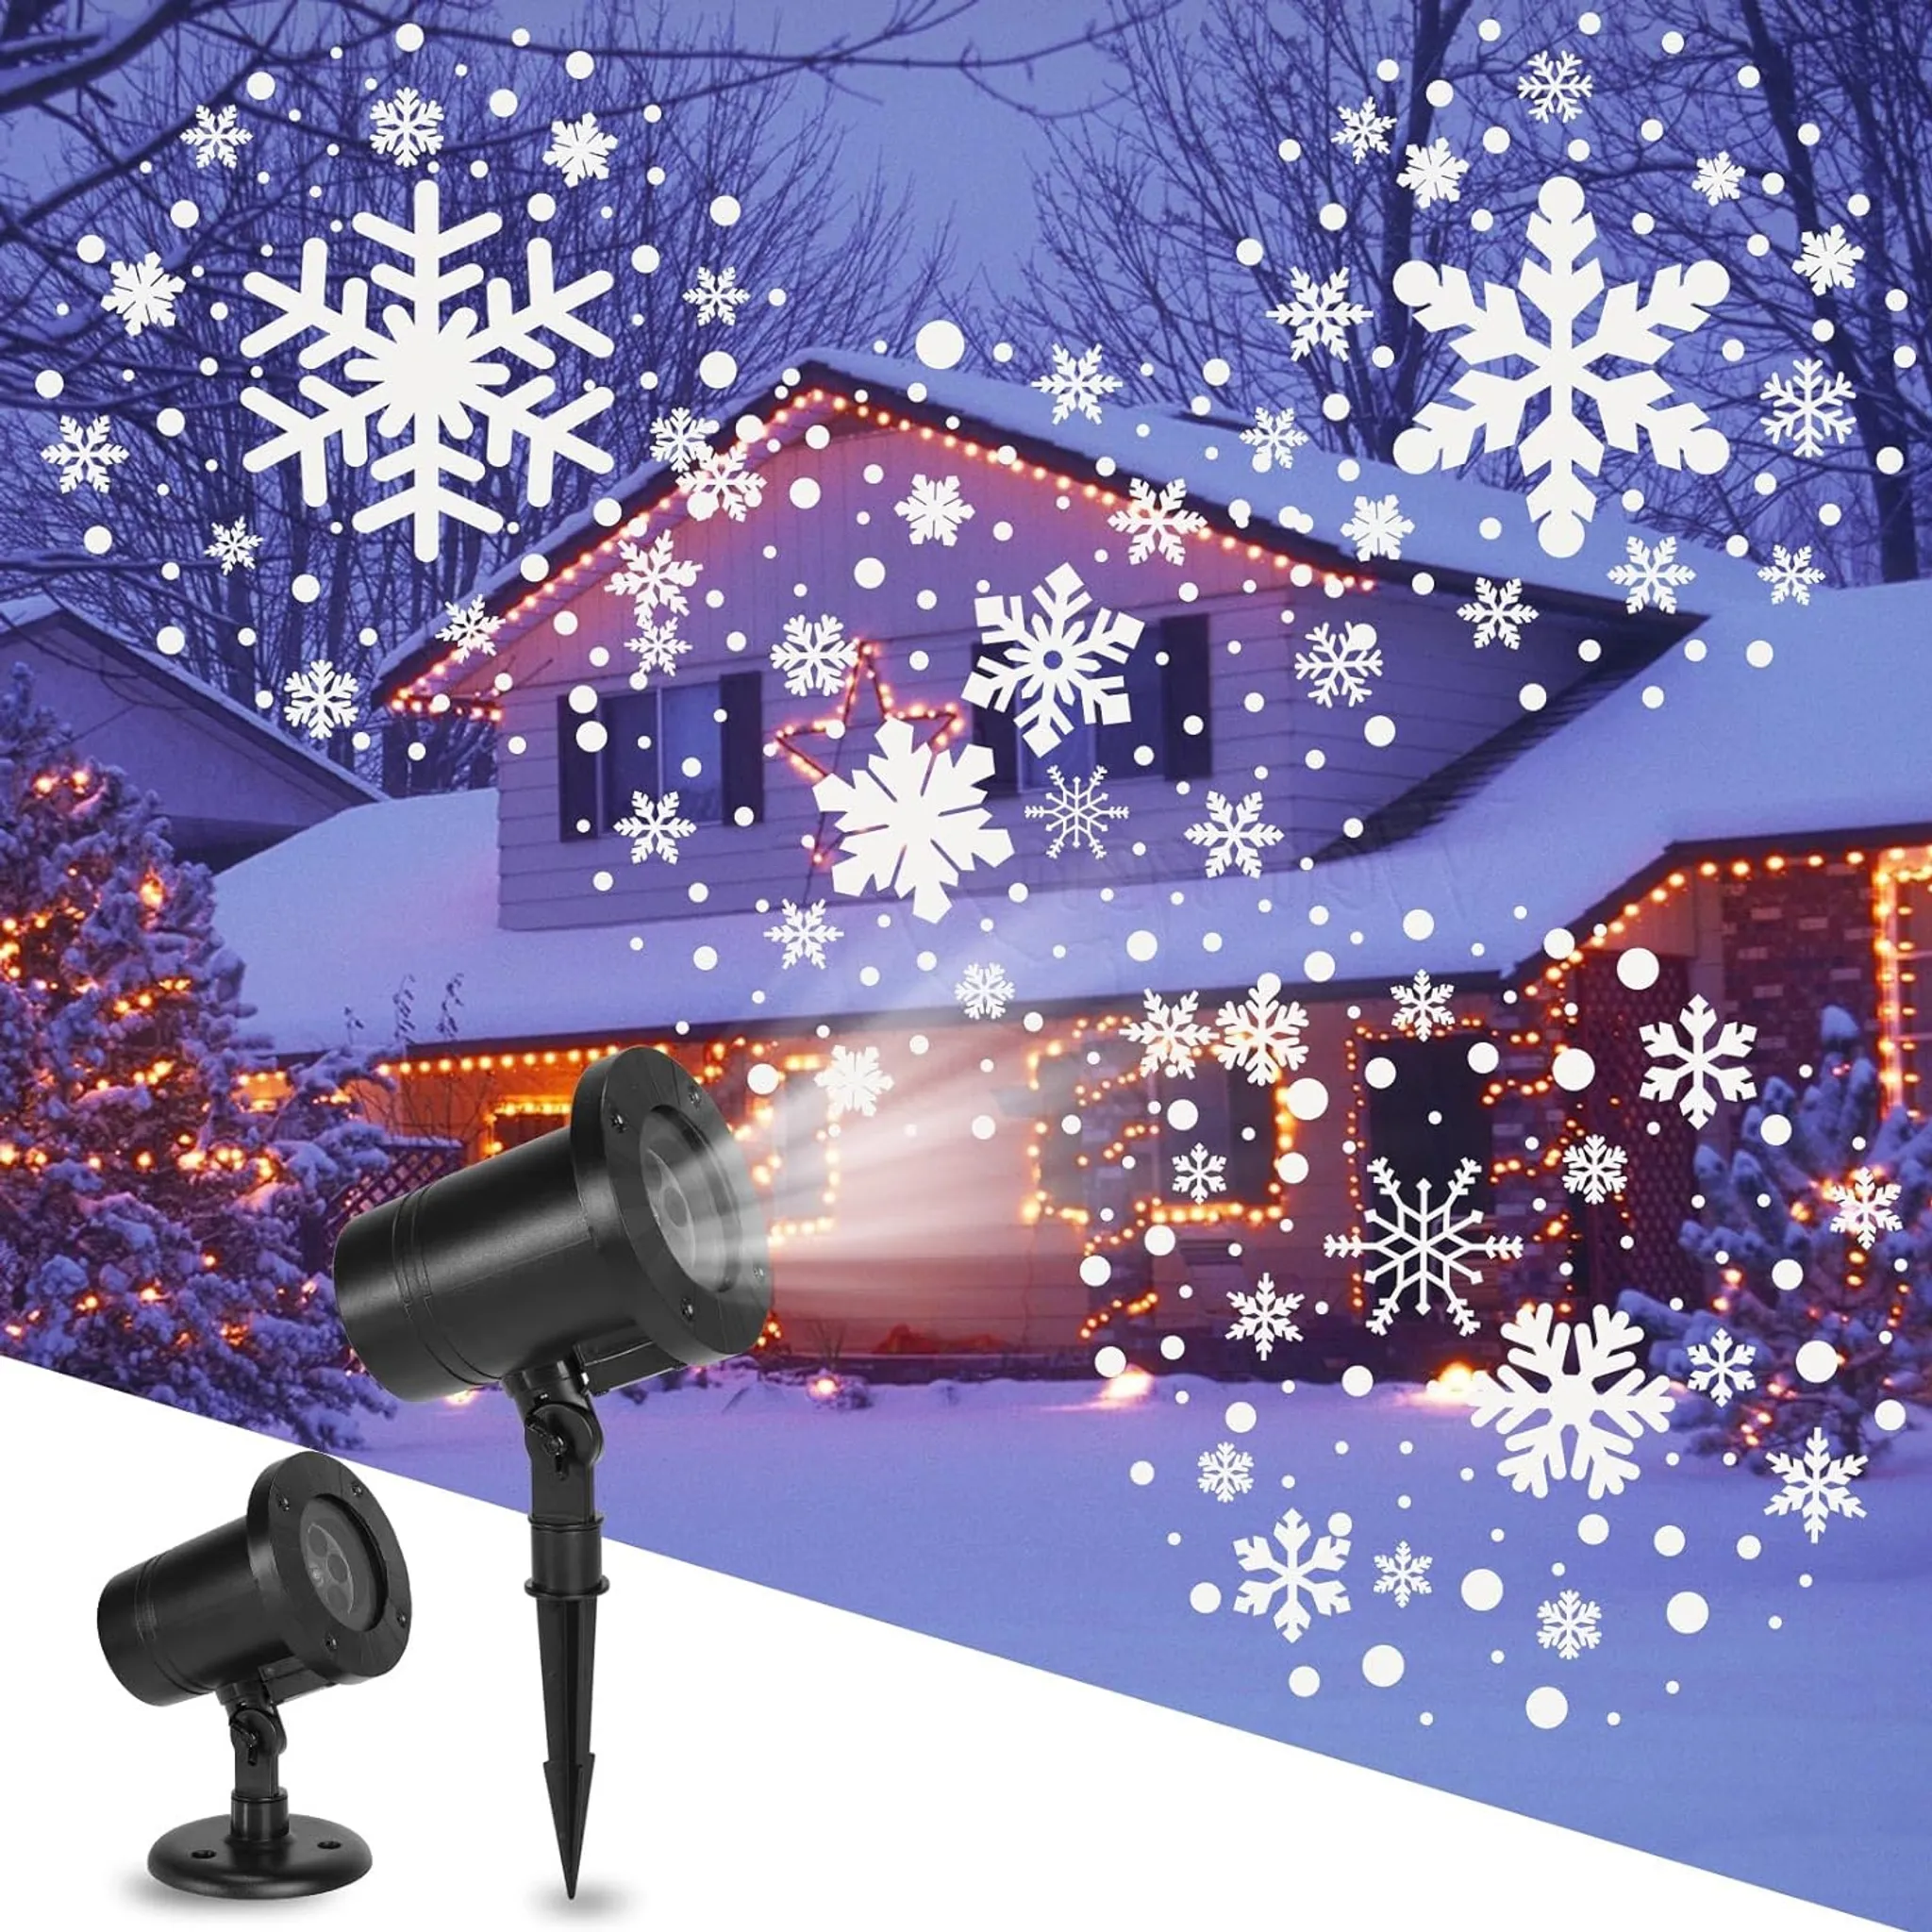 LED Snowflake Projektor lampe Schneefall